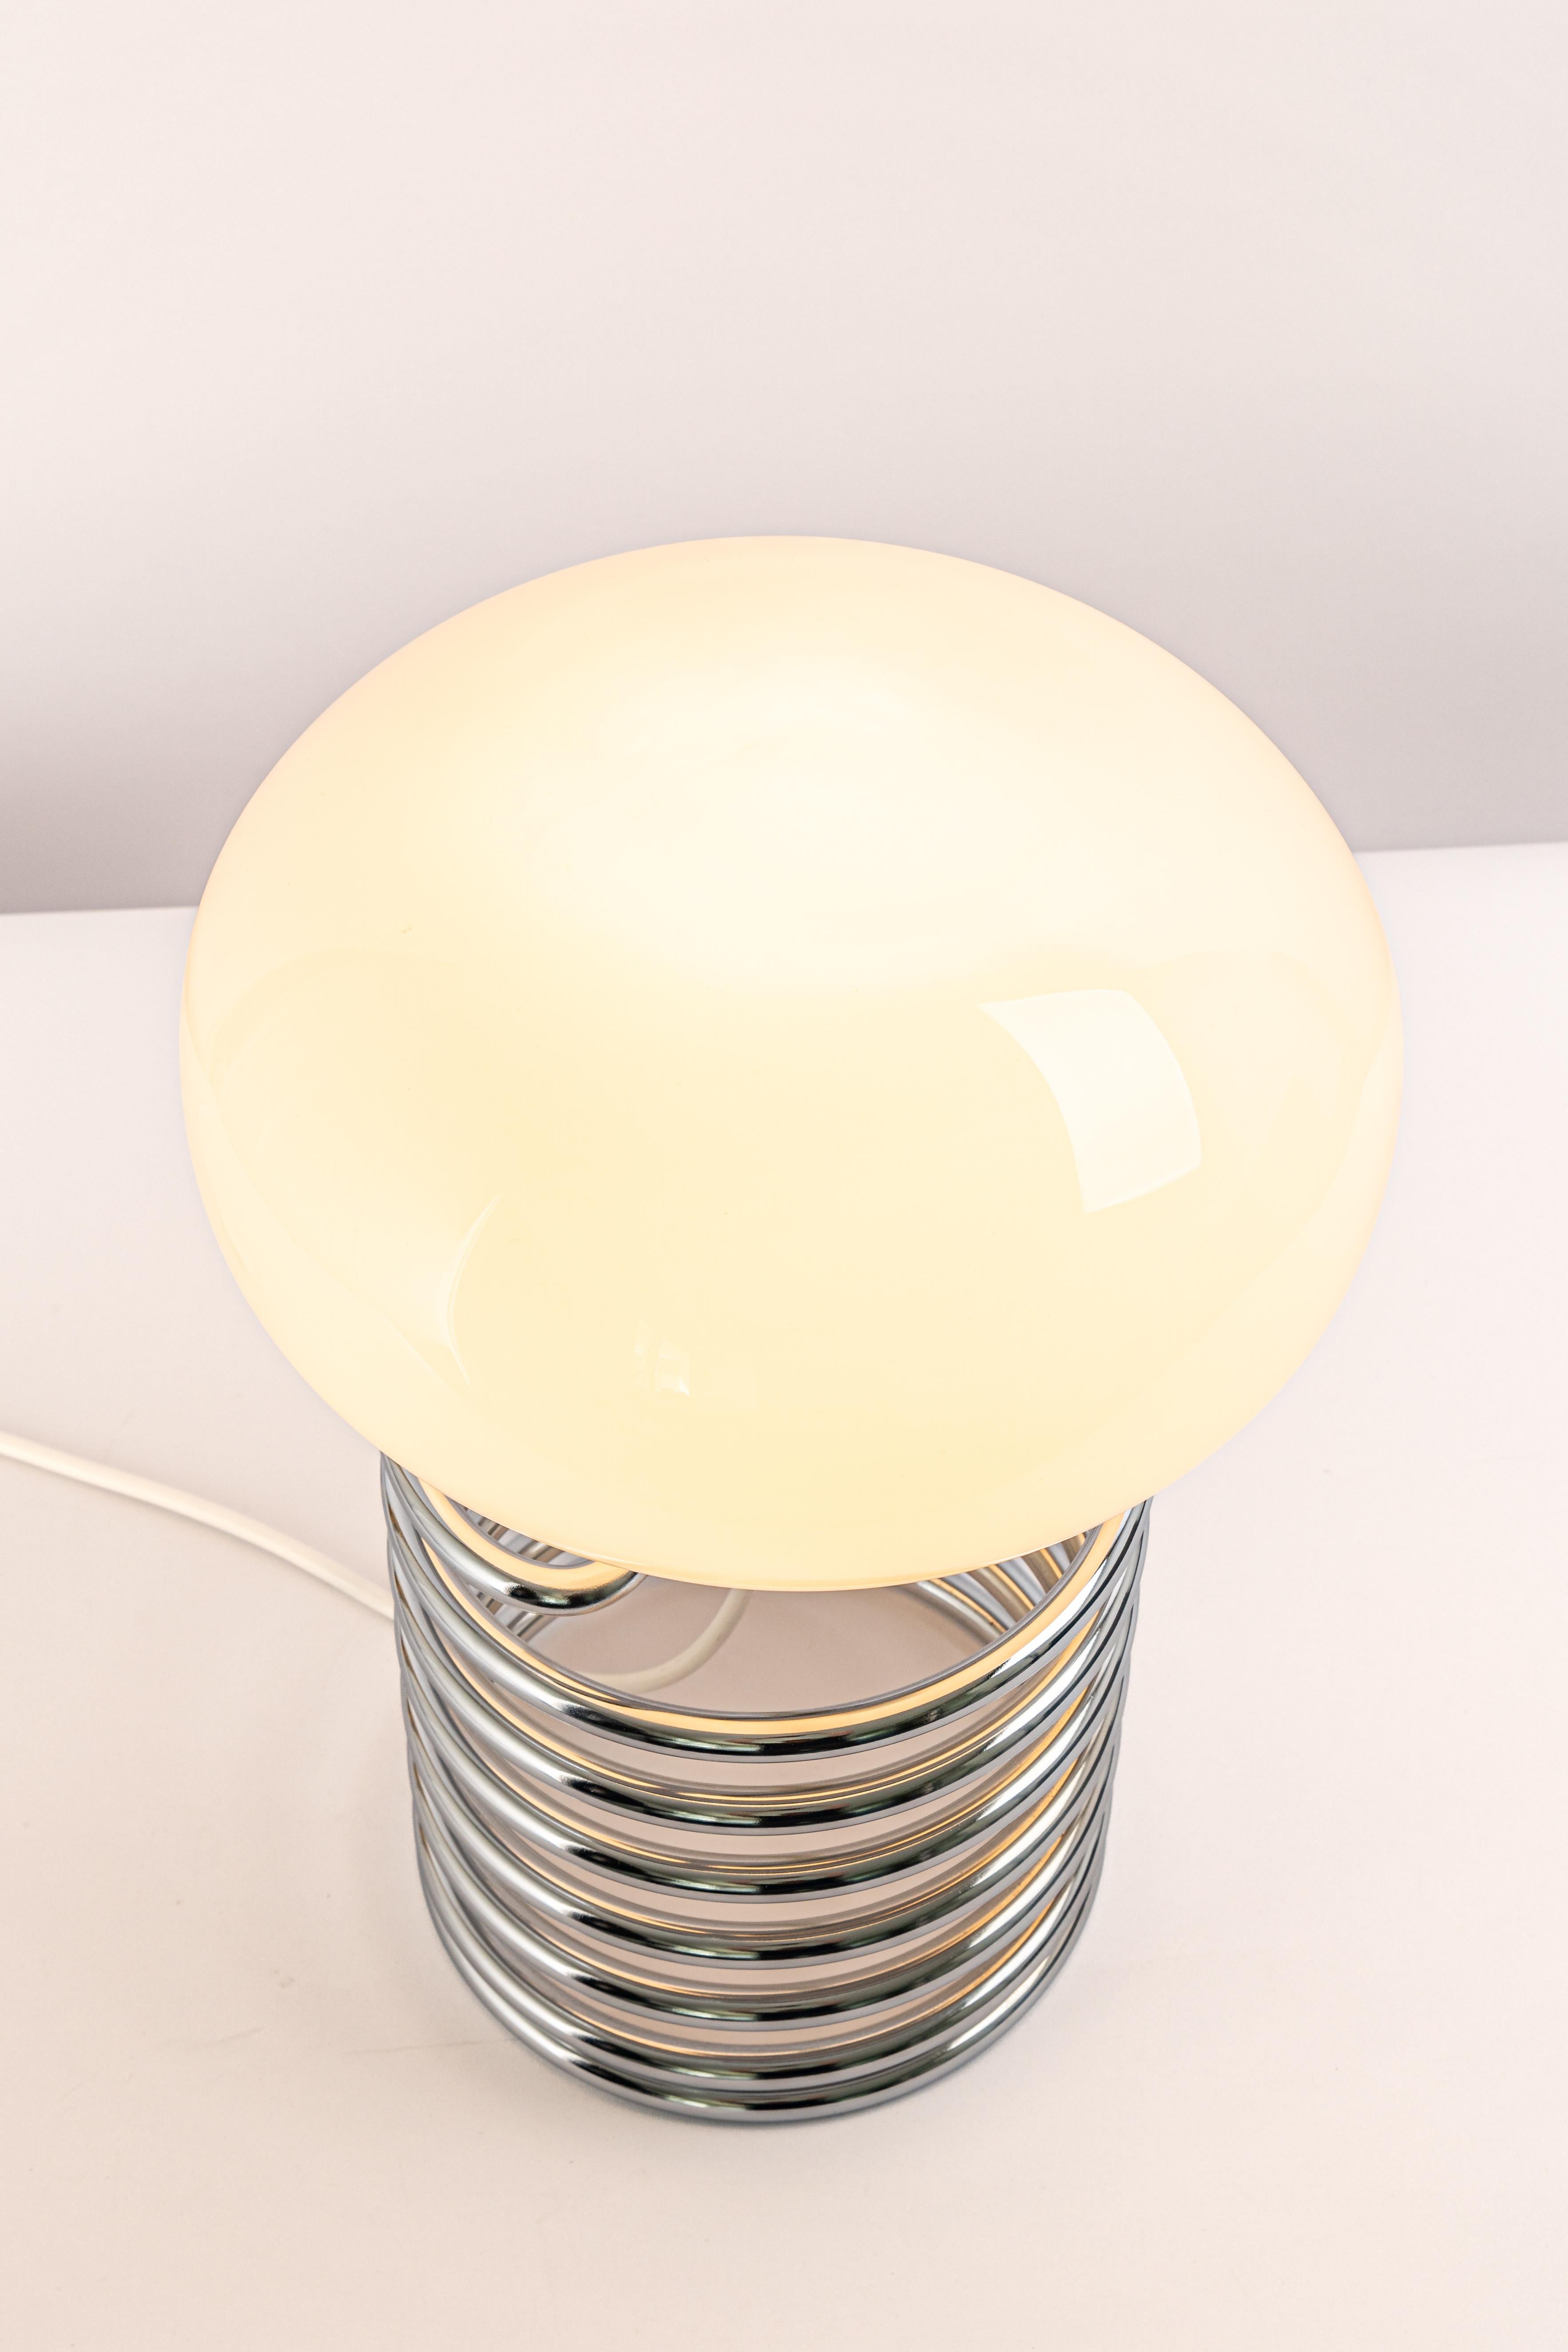 1 of 2 Stunning Design Spiral Table Lamp, Ingo Maurer, 1970s For Sale 1